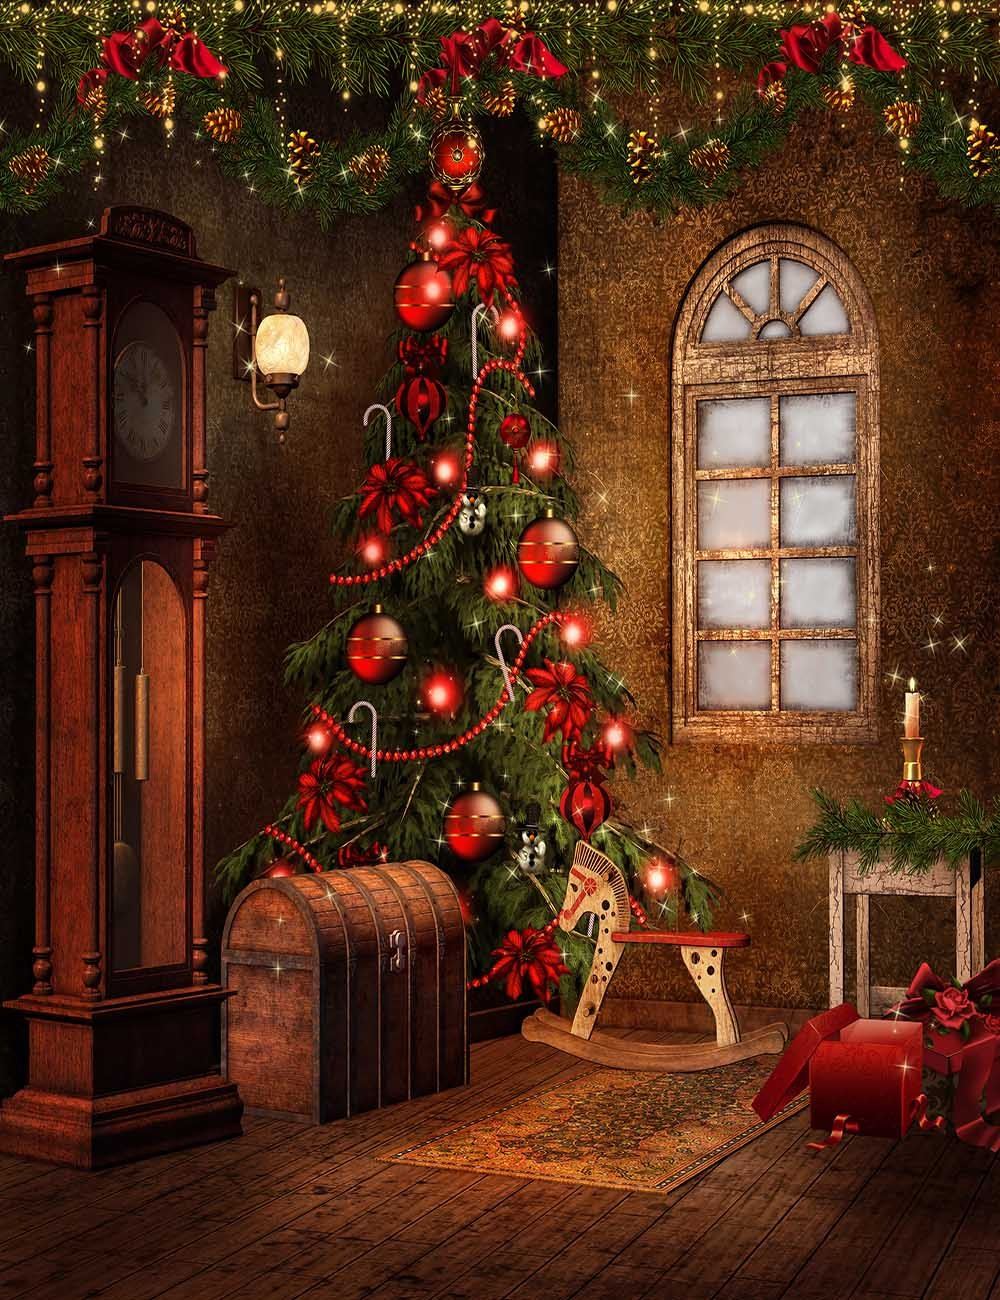 Senior Christmas Decorations Interior Holiday Photography Backdrop J-0650 Shopbackdrop